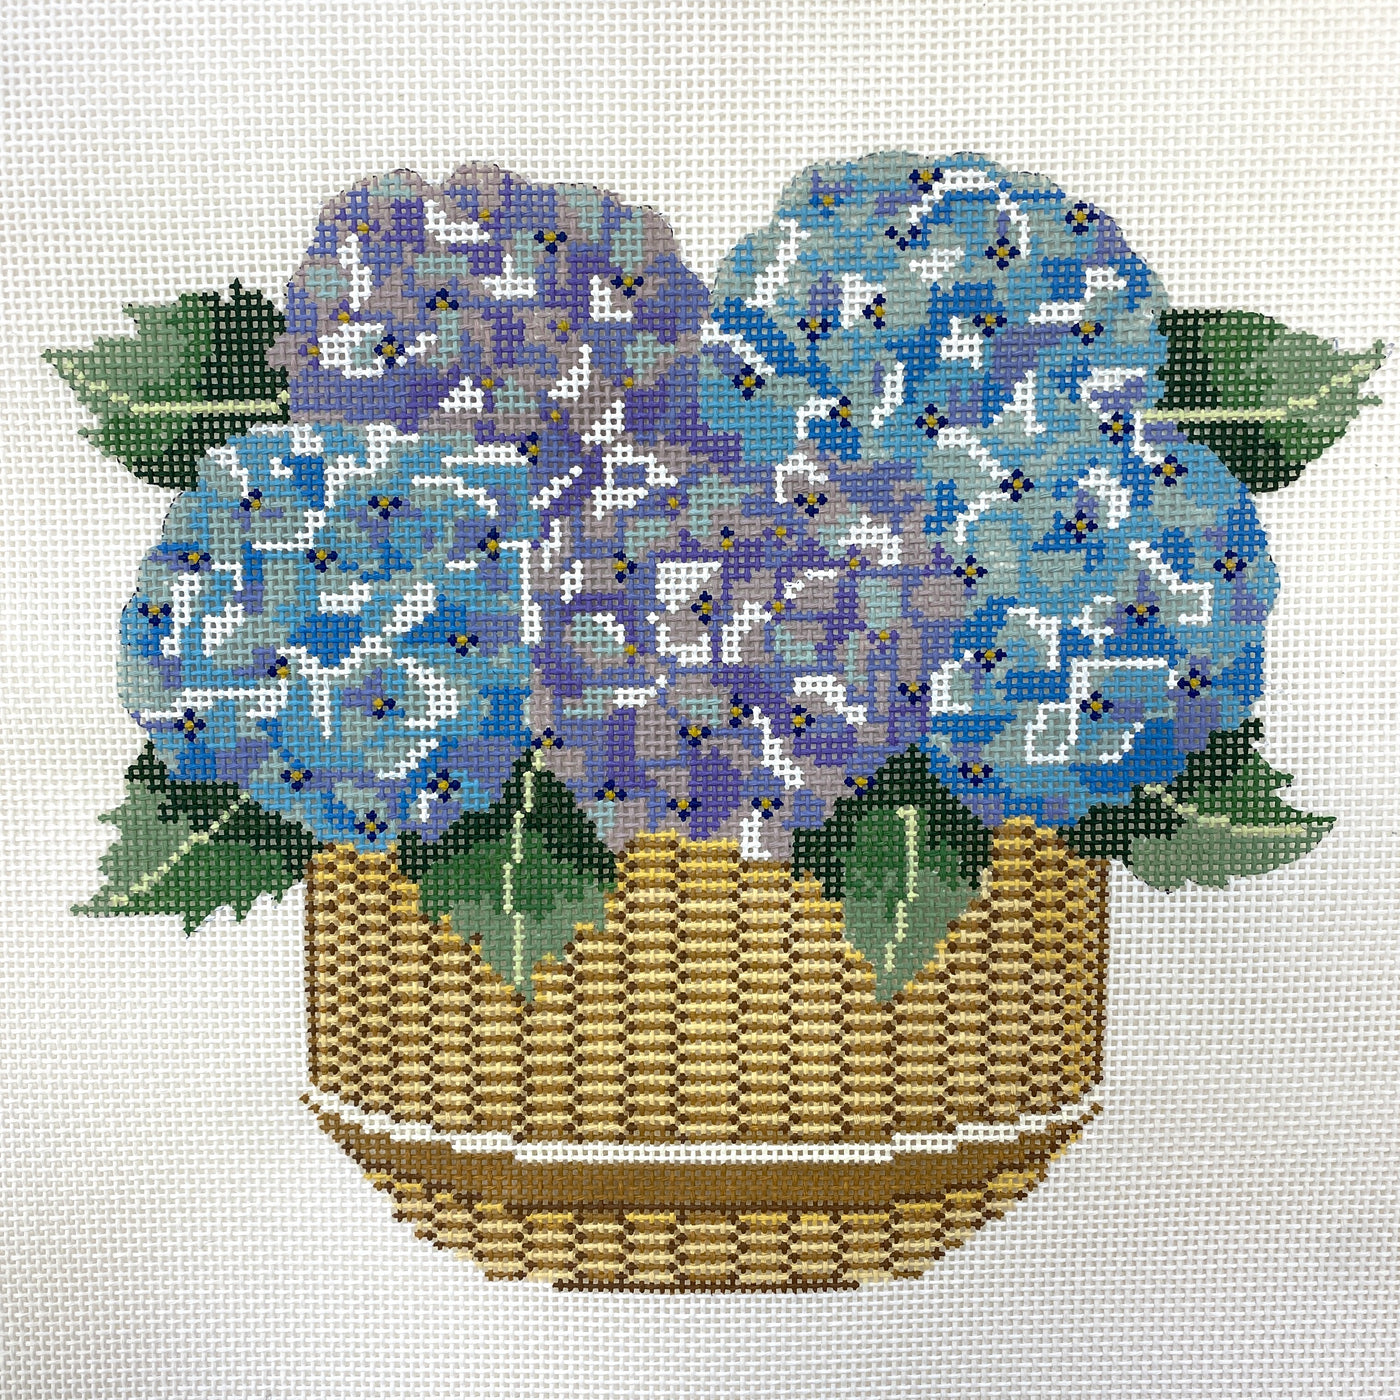 Blue & Purple hydranga in a basket Needlepoint Canvas